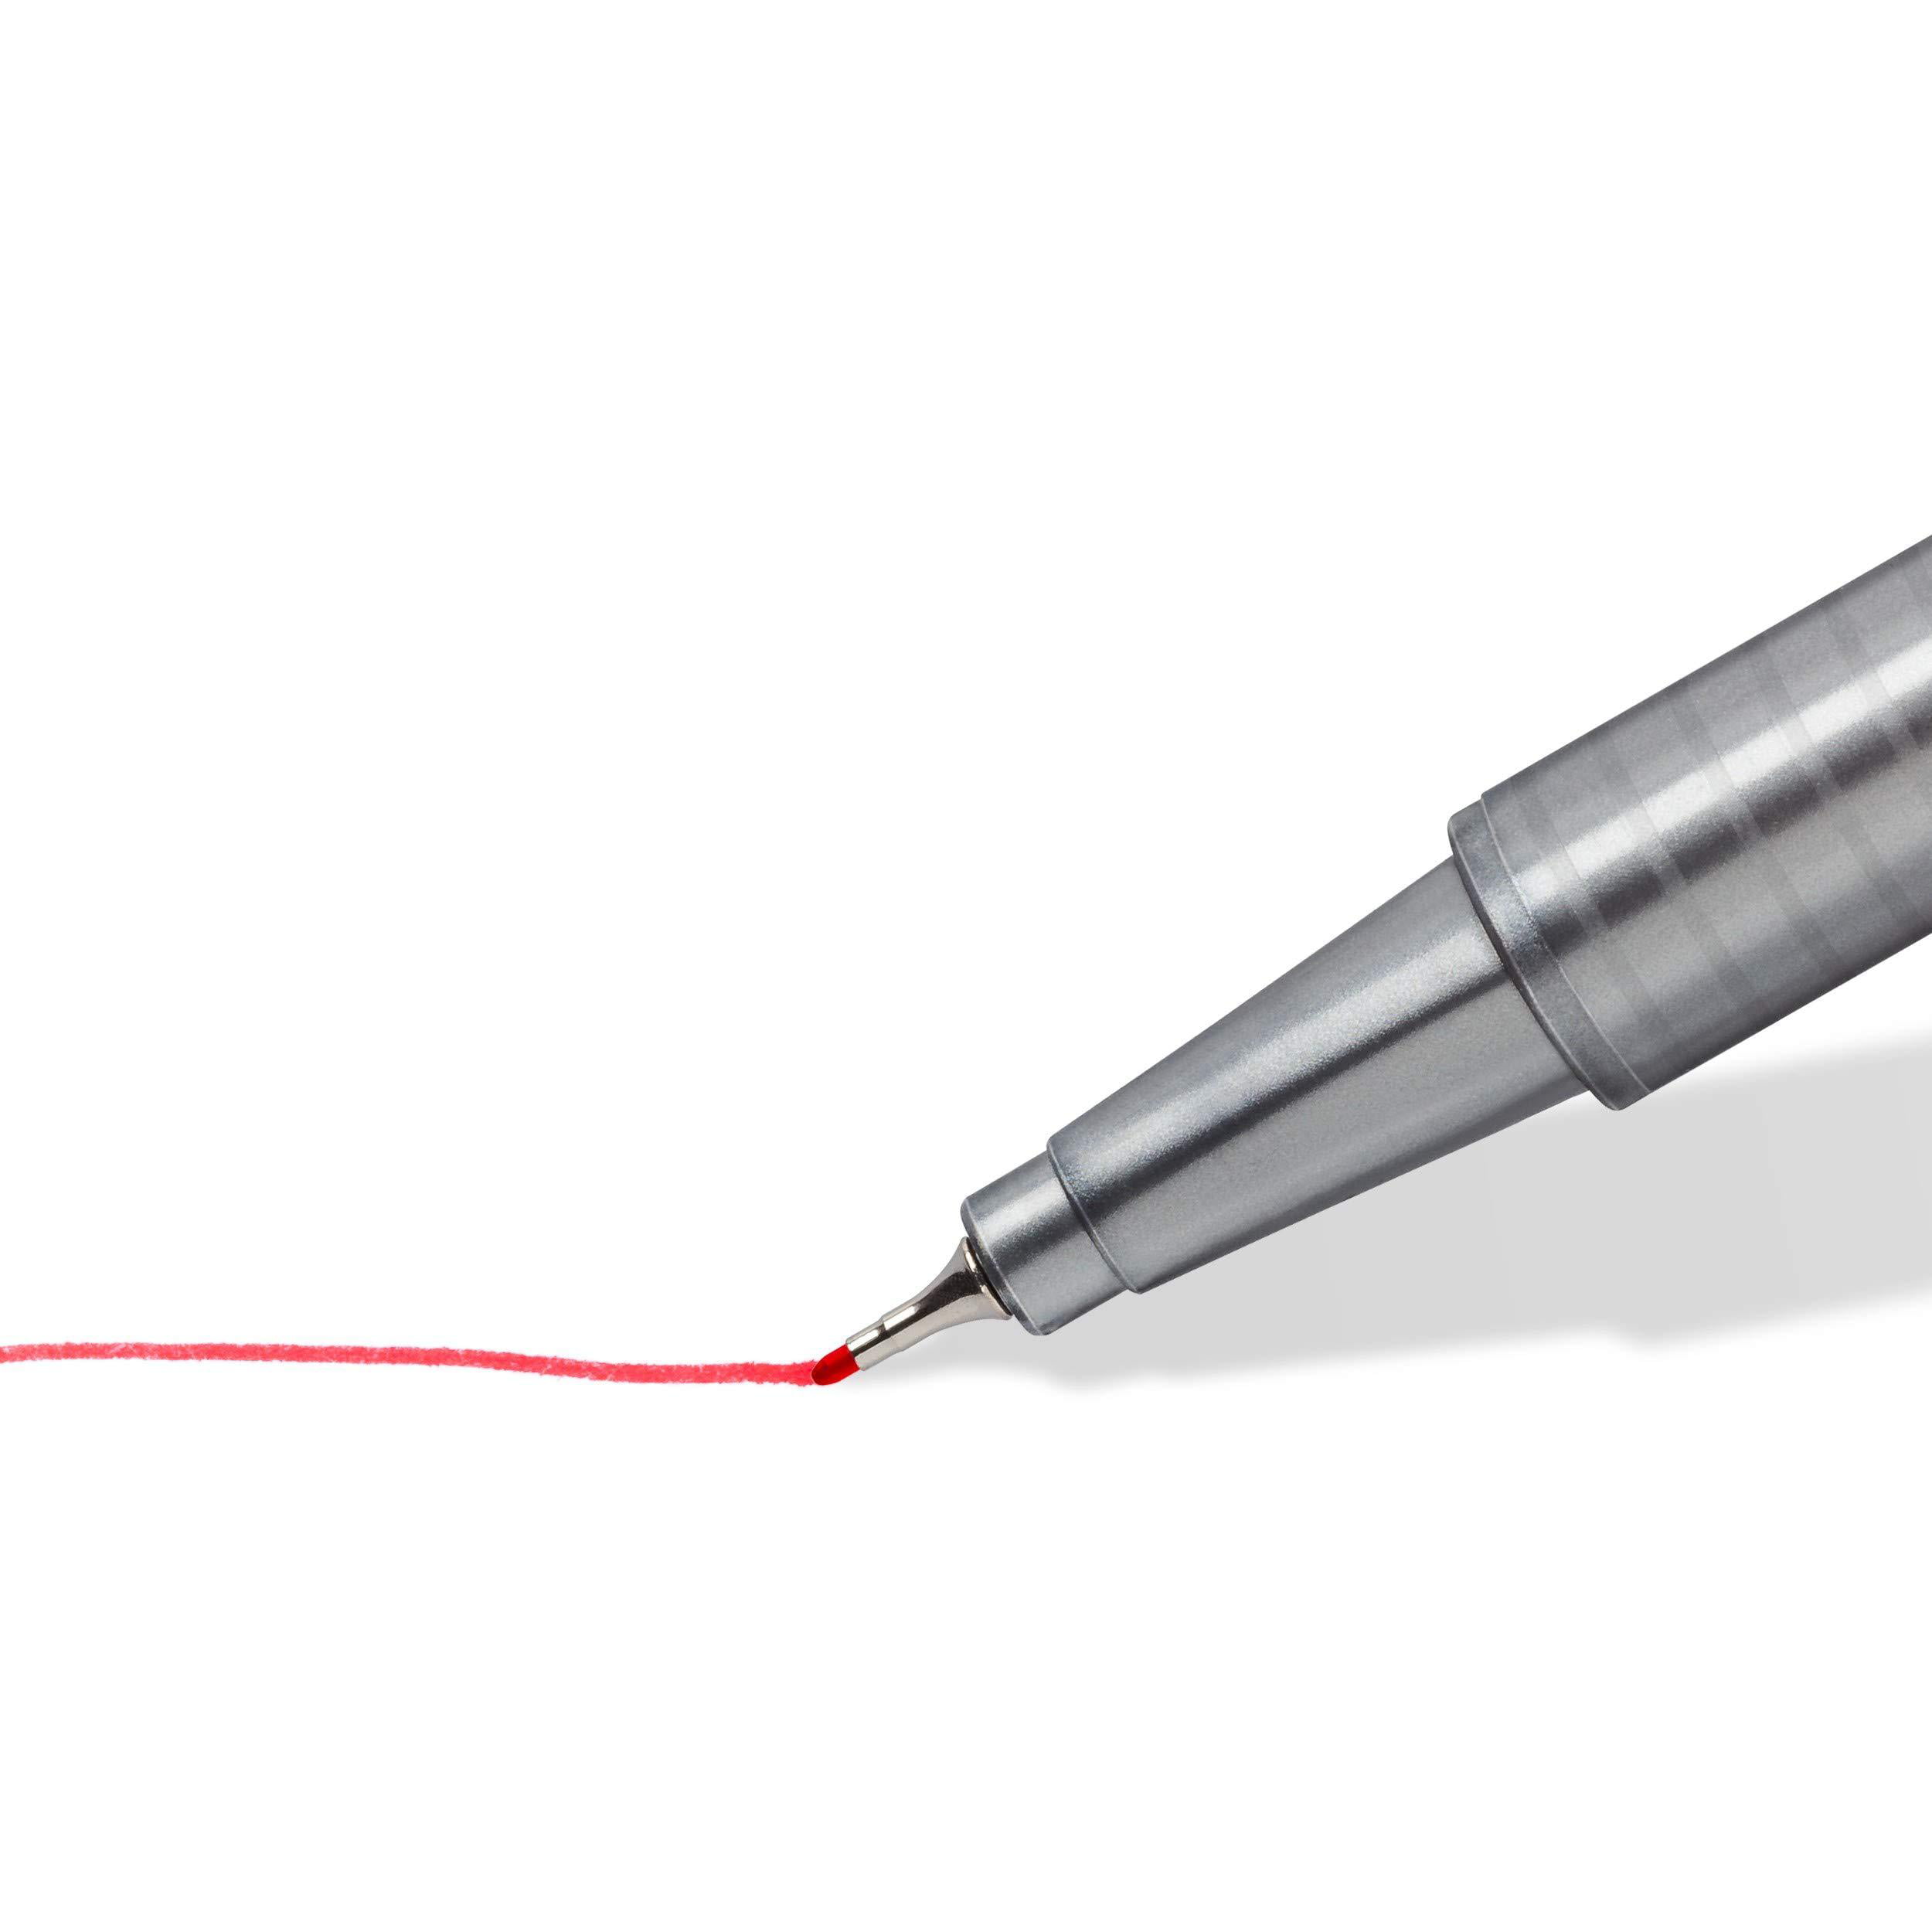 Staedtler Triplus Fineliner 0.3 mm Porous Point Pen 334 - SB10, 10 pack 